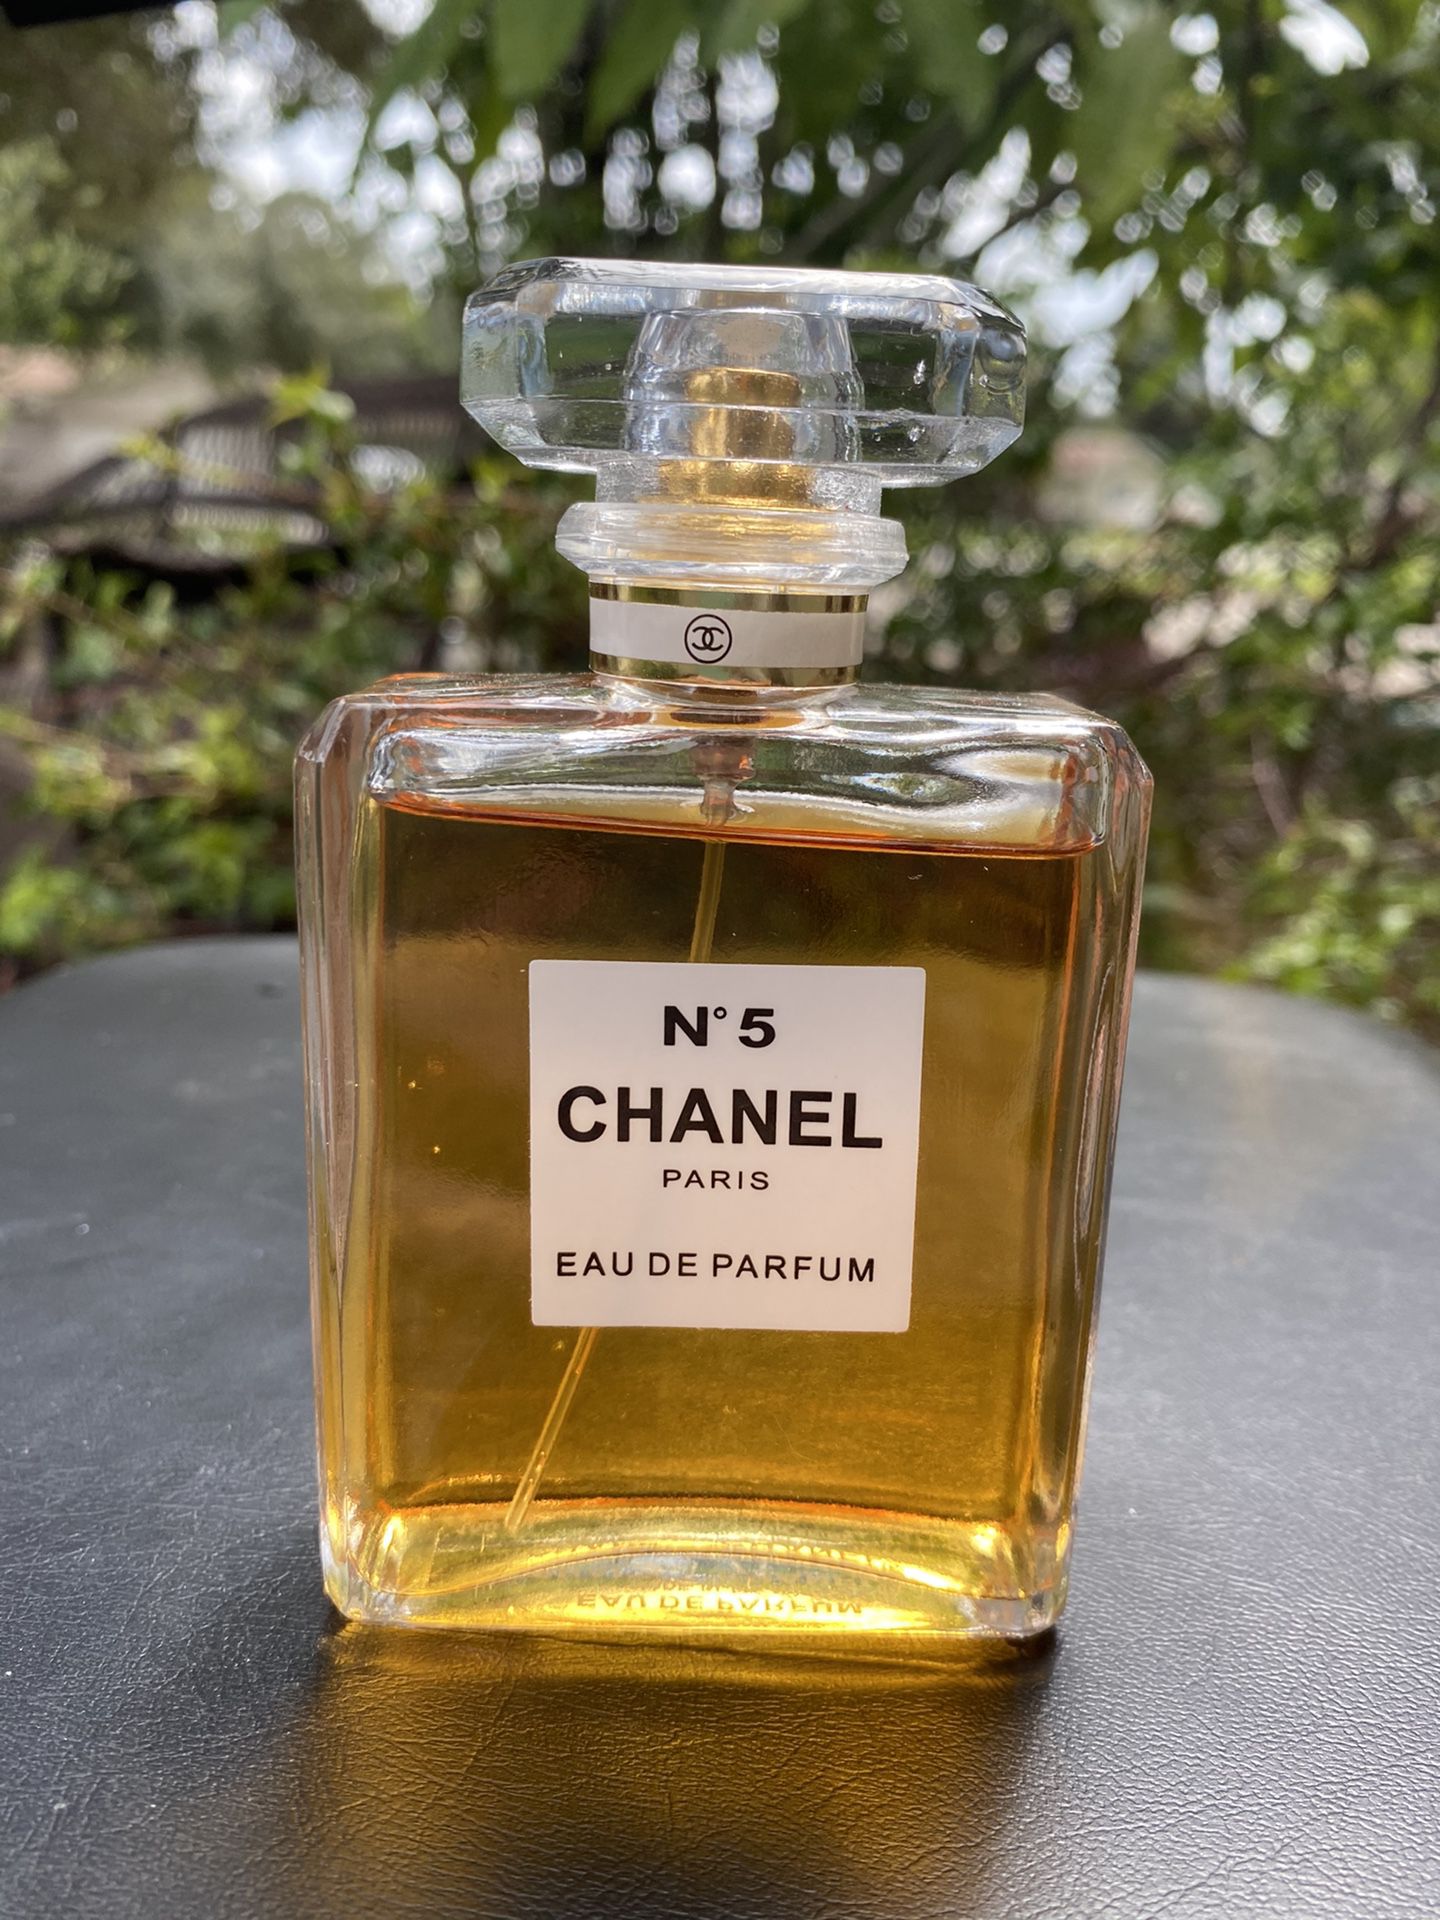 Chanel woman’s perfume #5